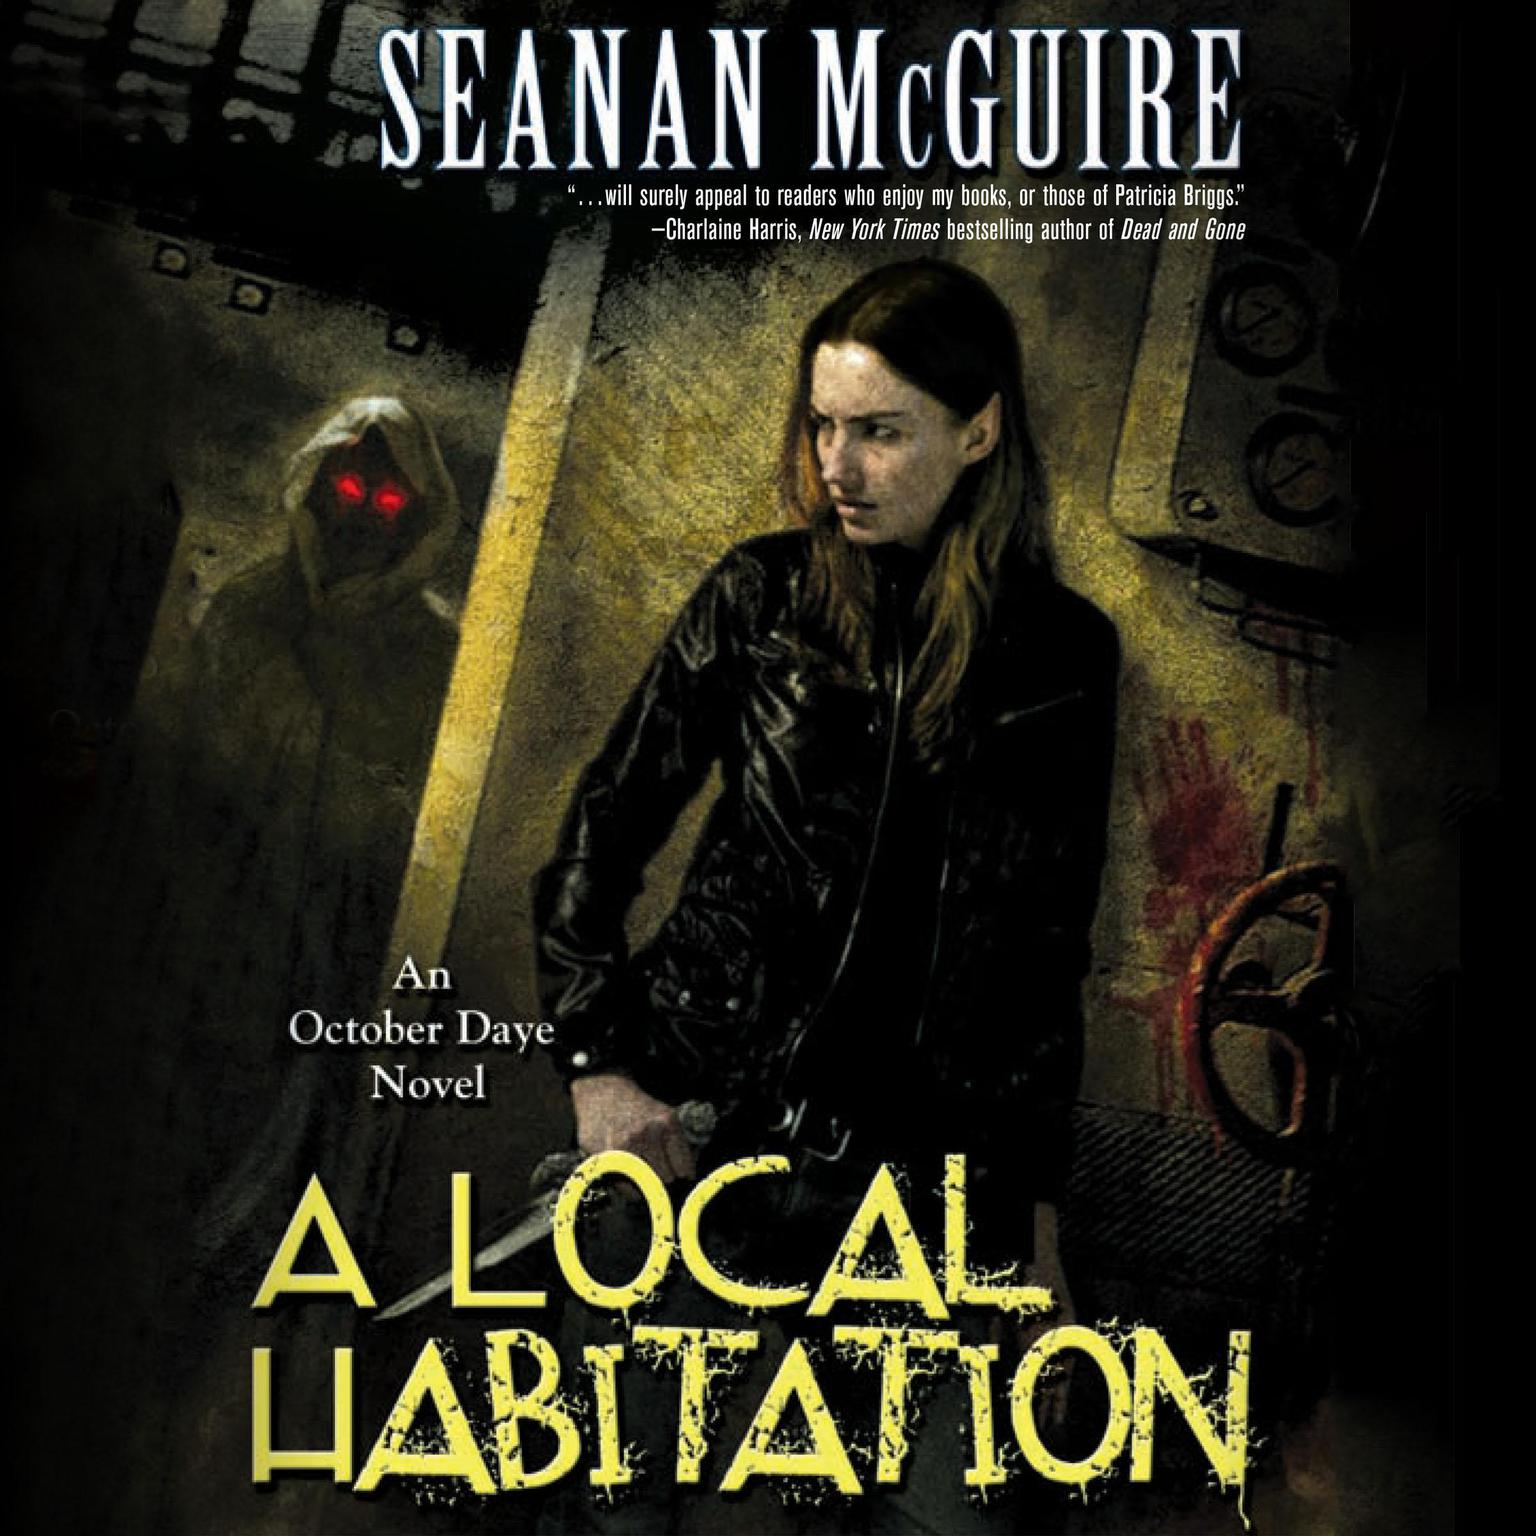 A Local Habitation: An October Daye Novel Audiobook, by Seanan McGuire